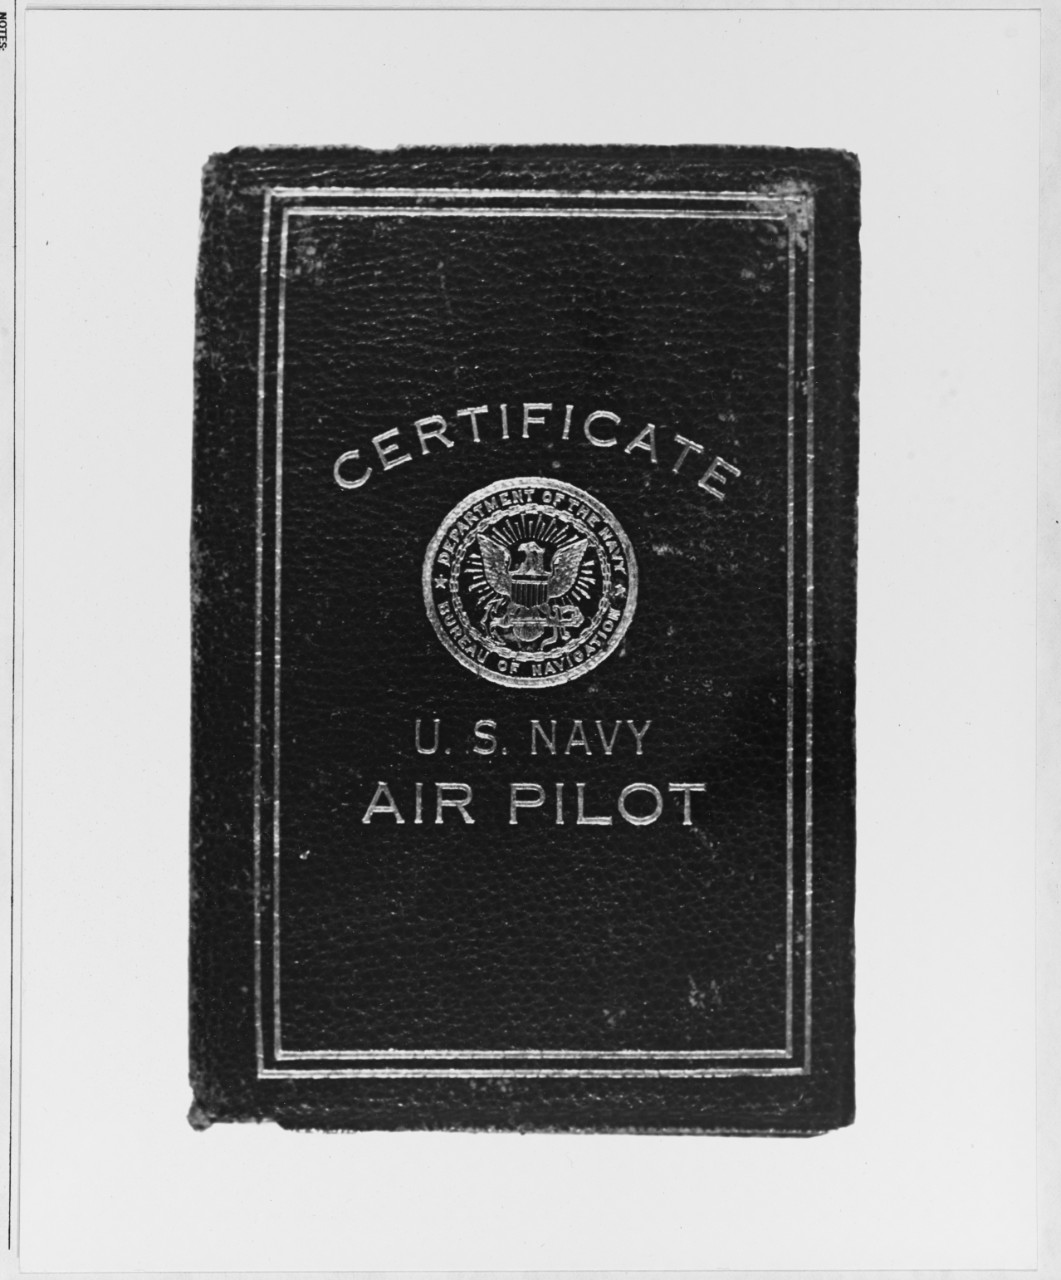 Ellyson's U.S. Navy Air Pilot Certificate